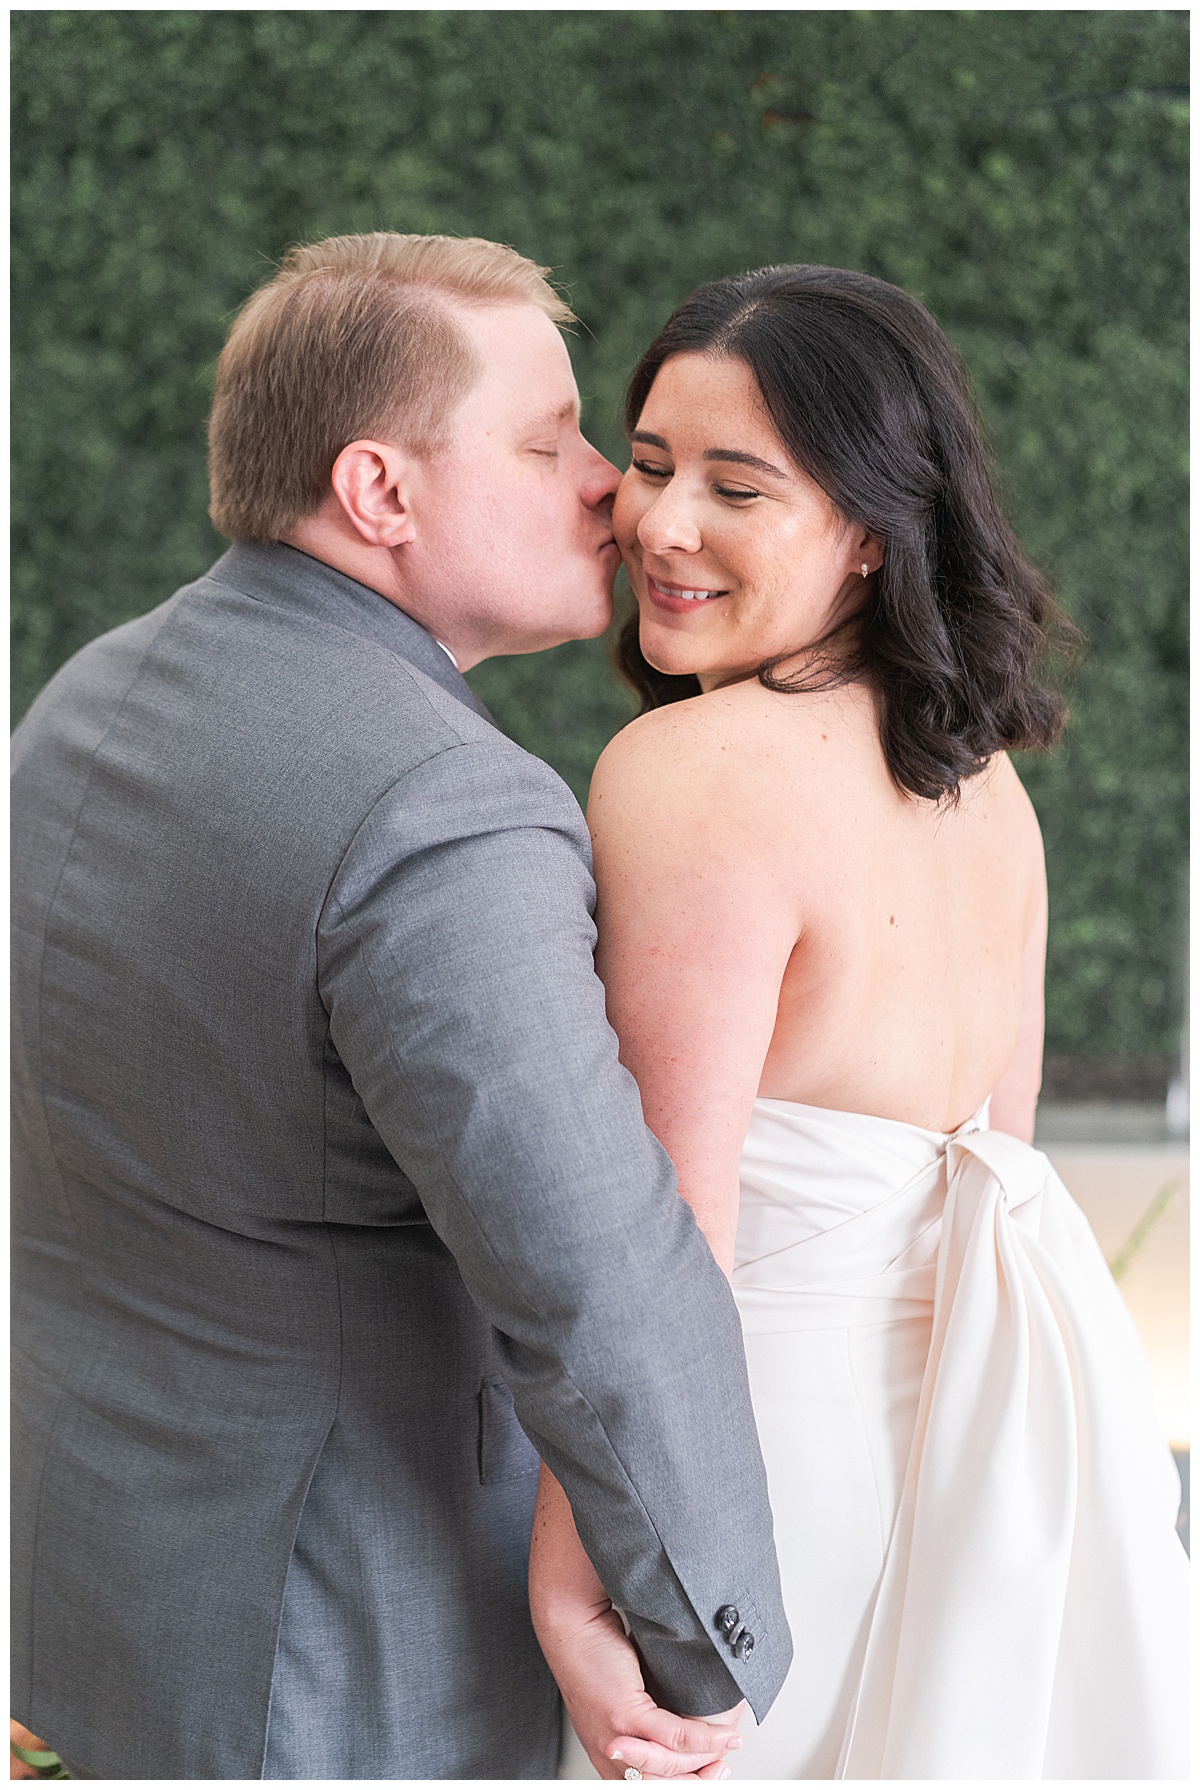 Guy kisses girl on cheek for Swish & Click Photography